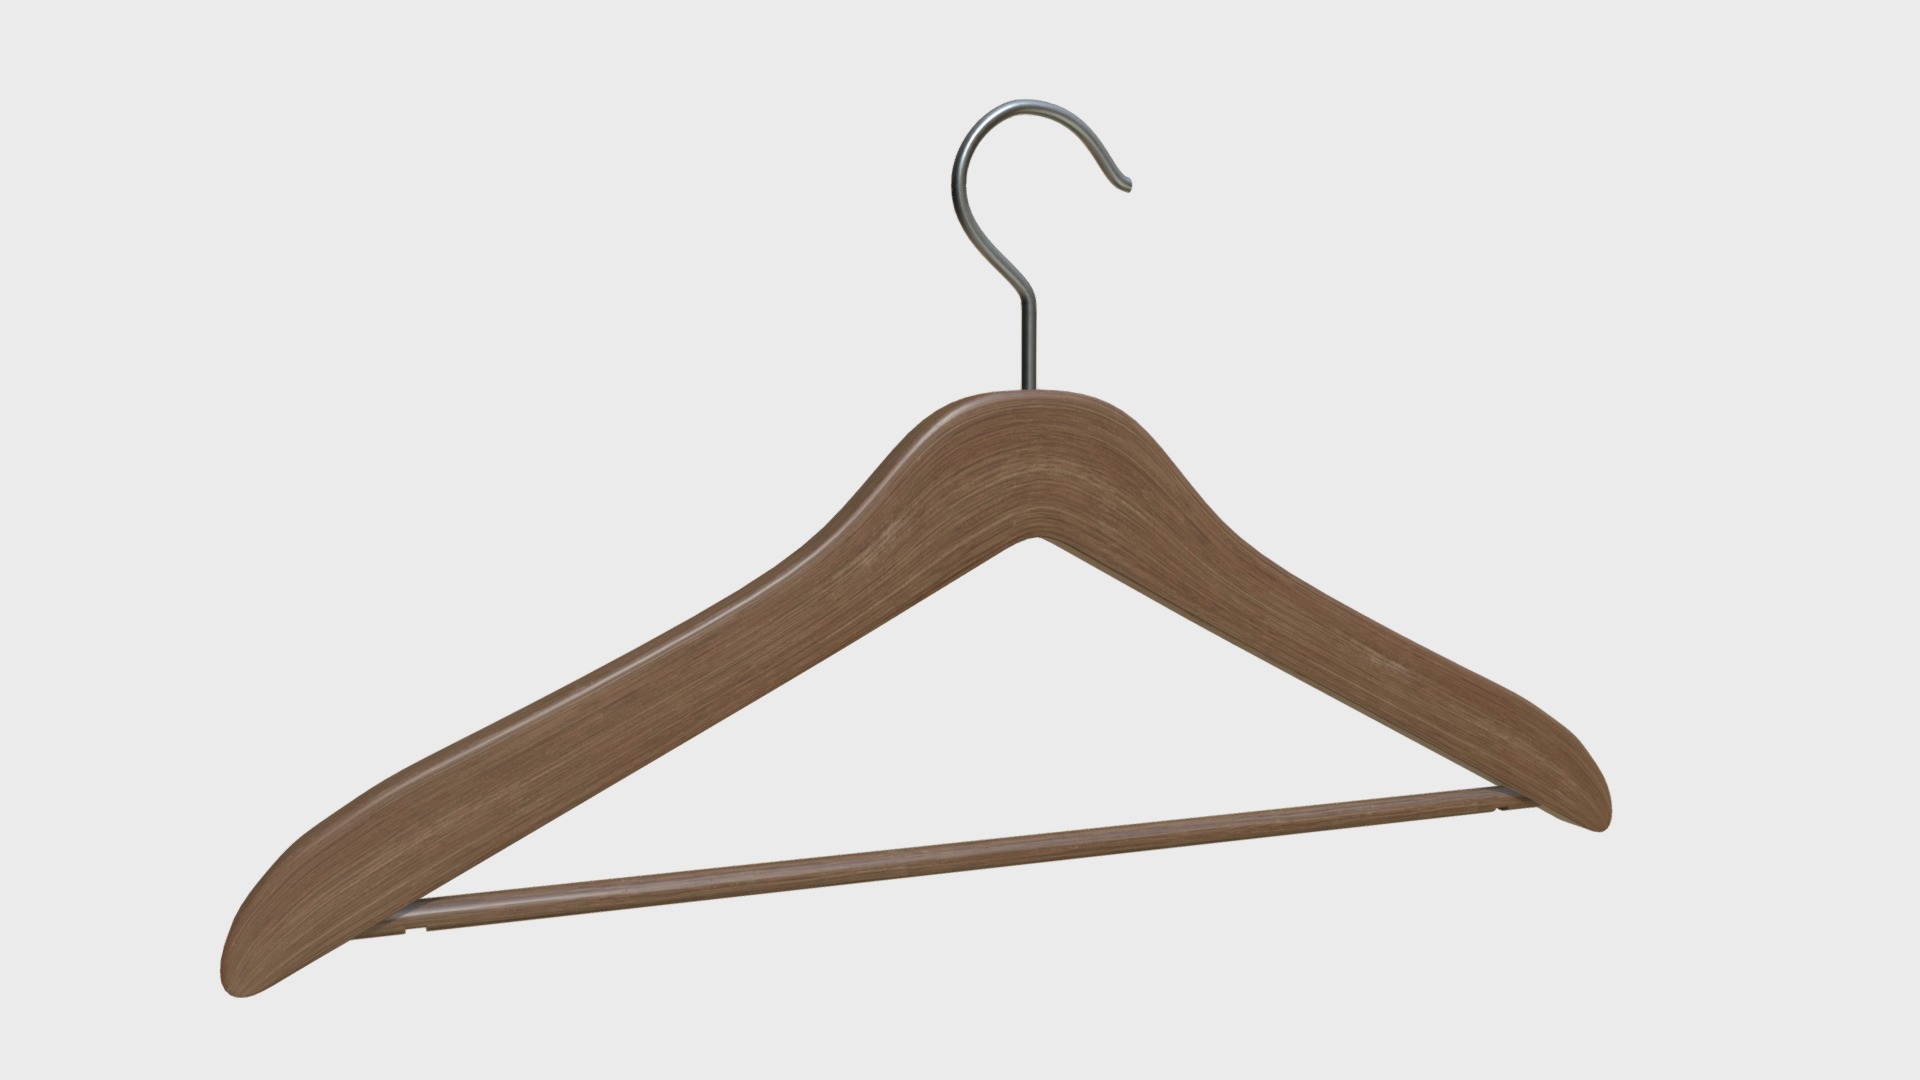 3D model Wooden coat hanger 1 - This is a 3D model of the Wooden coat hanger 1. The 3D model is about a wooden sword with a handle.